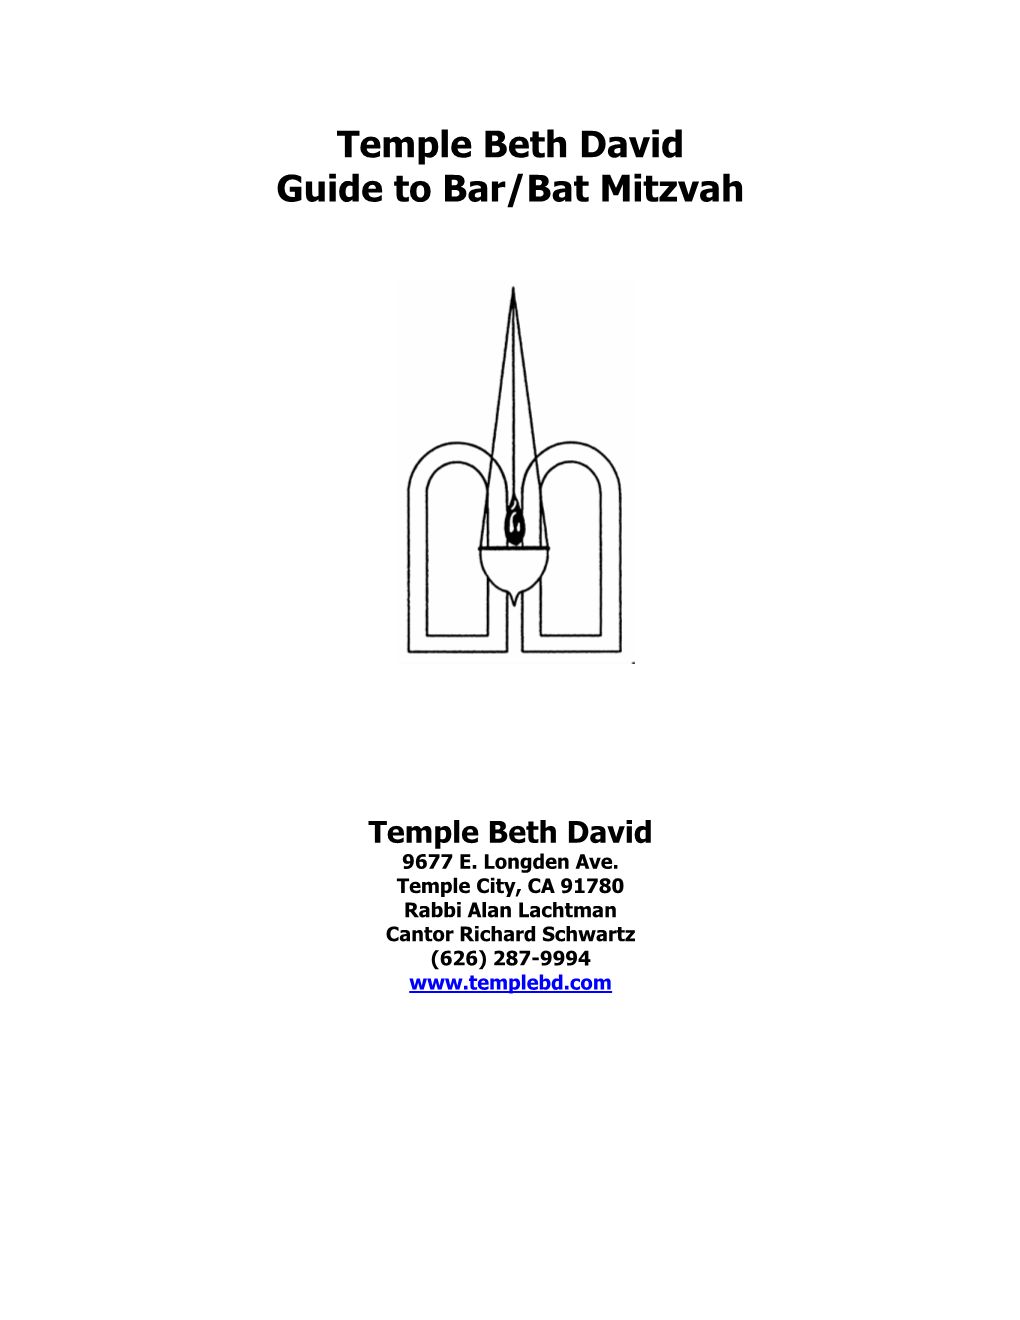 Bar/Bat Mitzvah Preparation